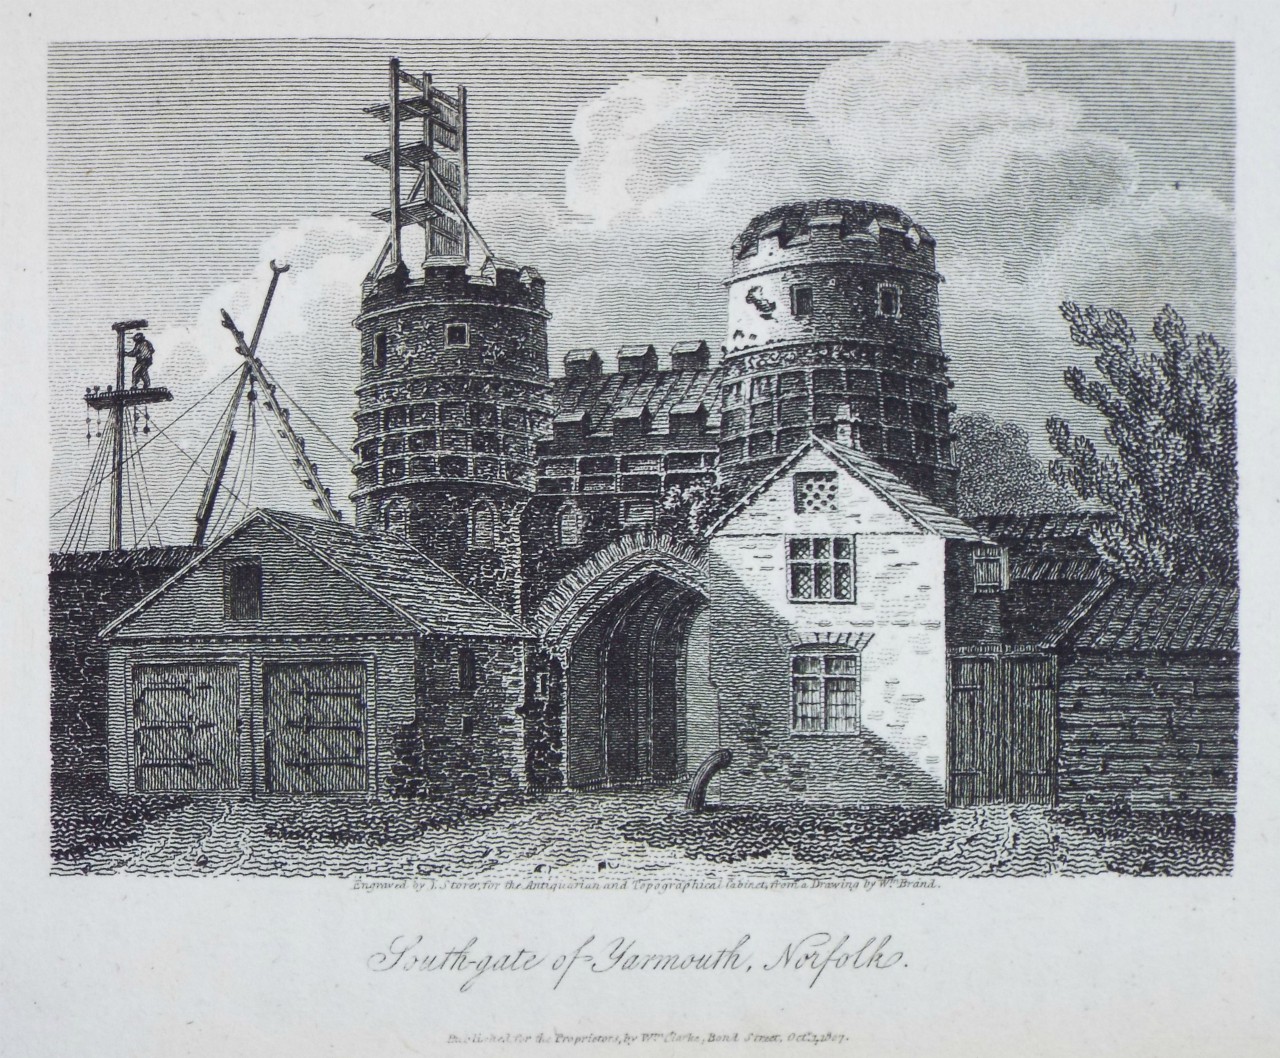 Print - South-Gate of Yarmouth, Norfolk. - Storer